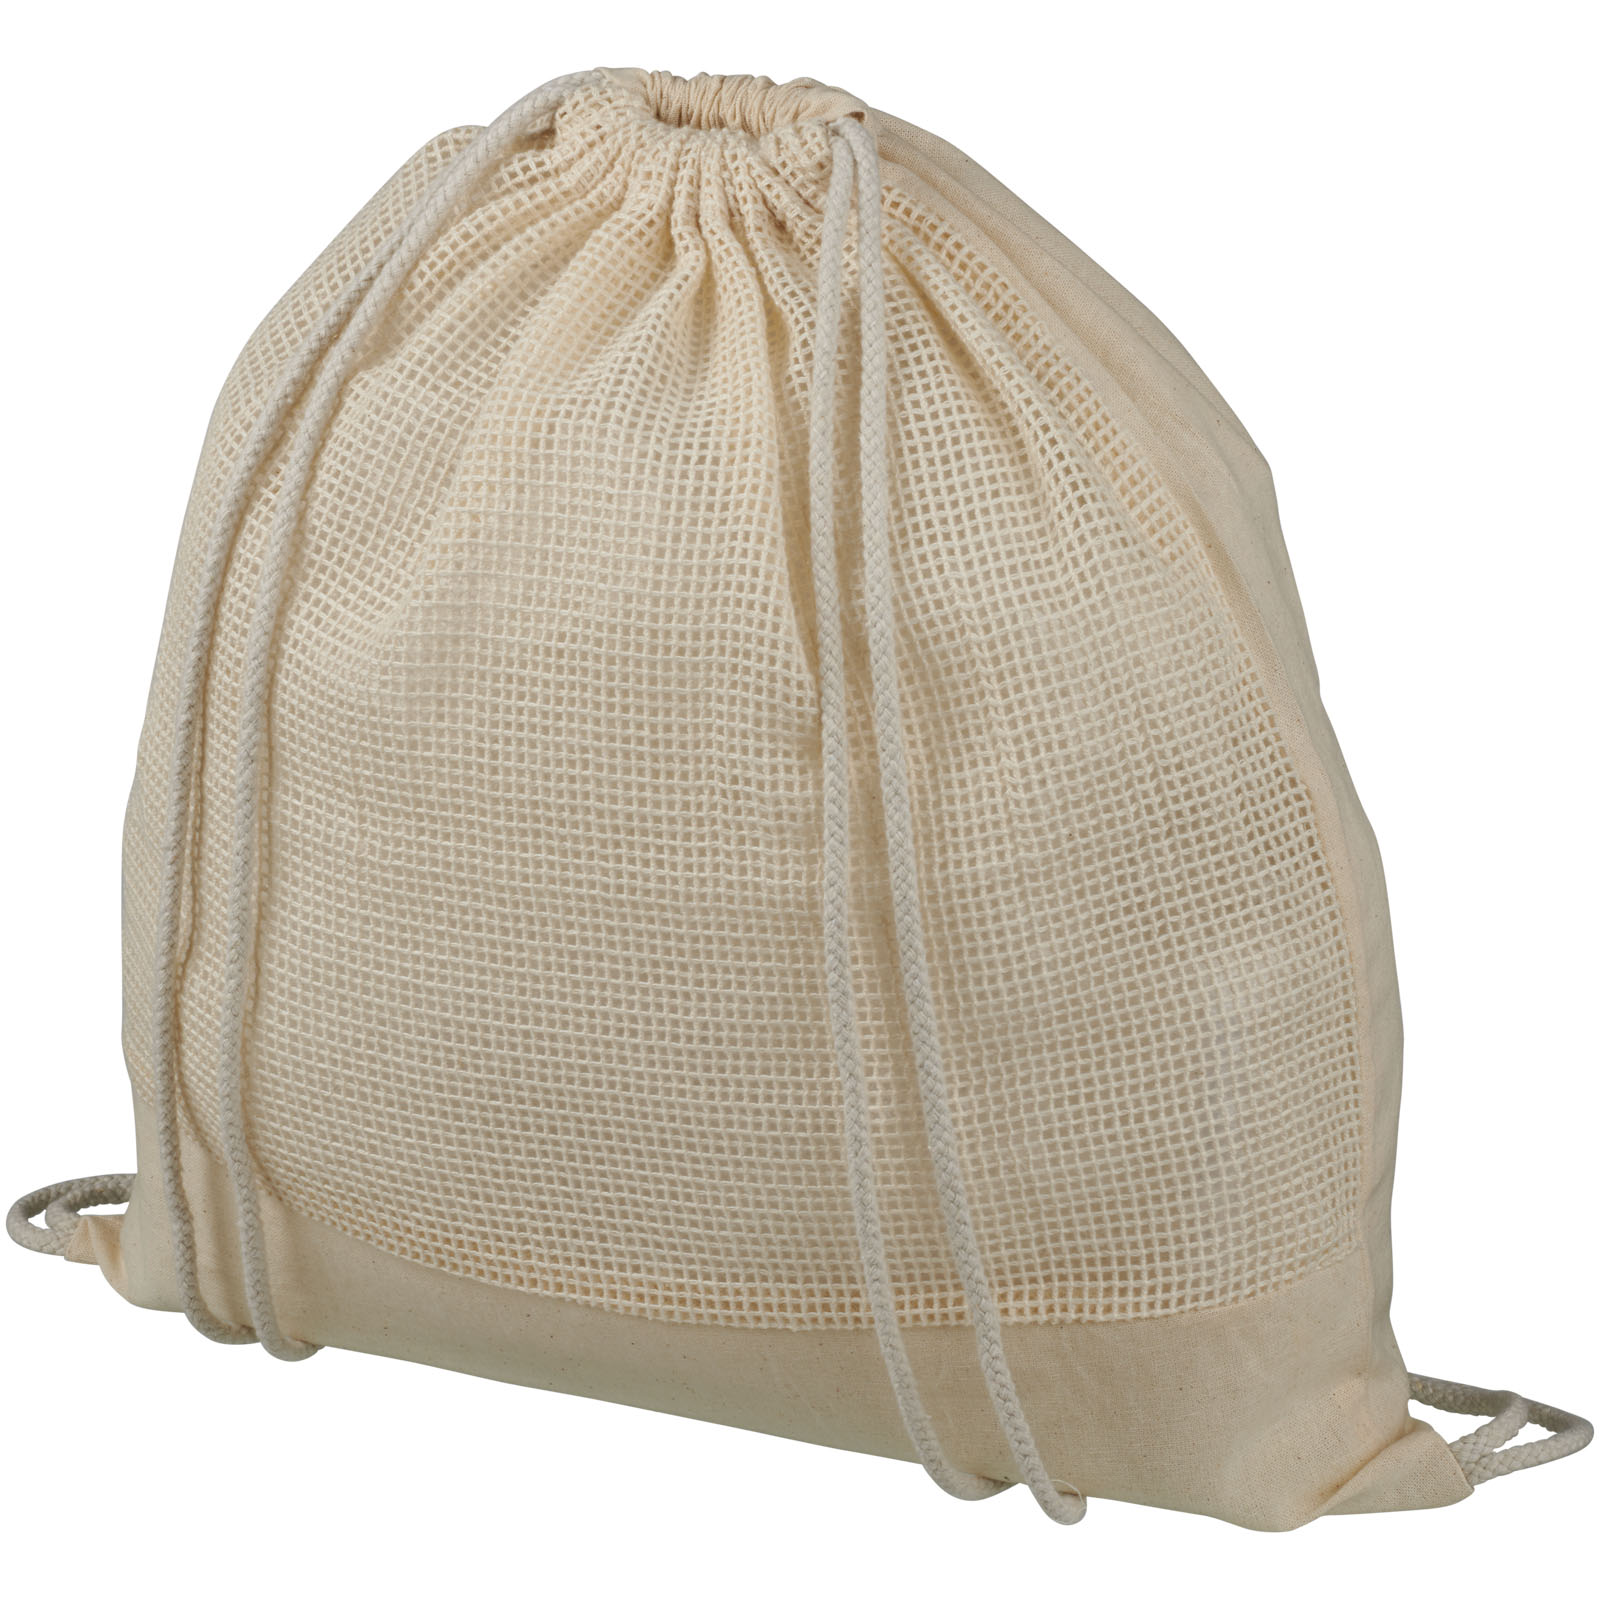 Advertising Drawstring Bags - Maine mesh cotton drawstring bag 5L - 0